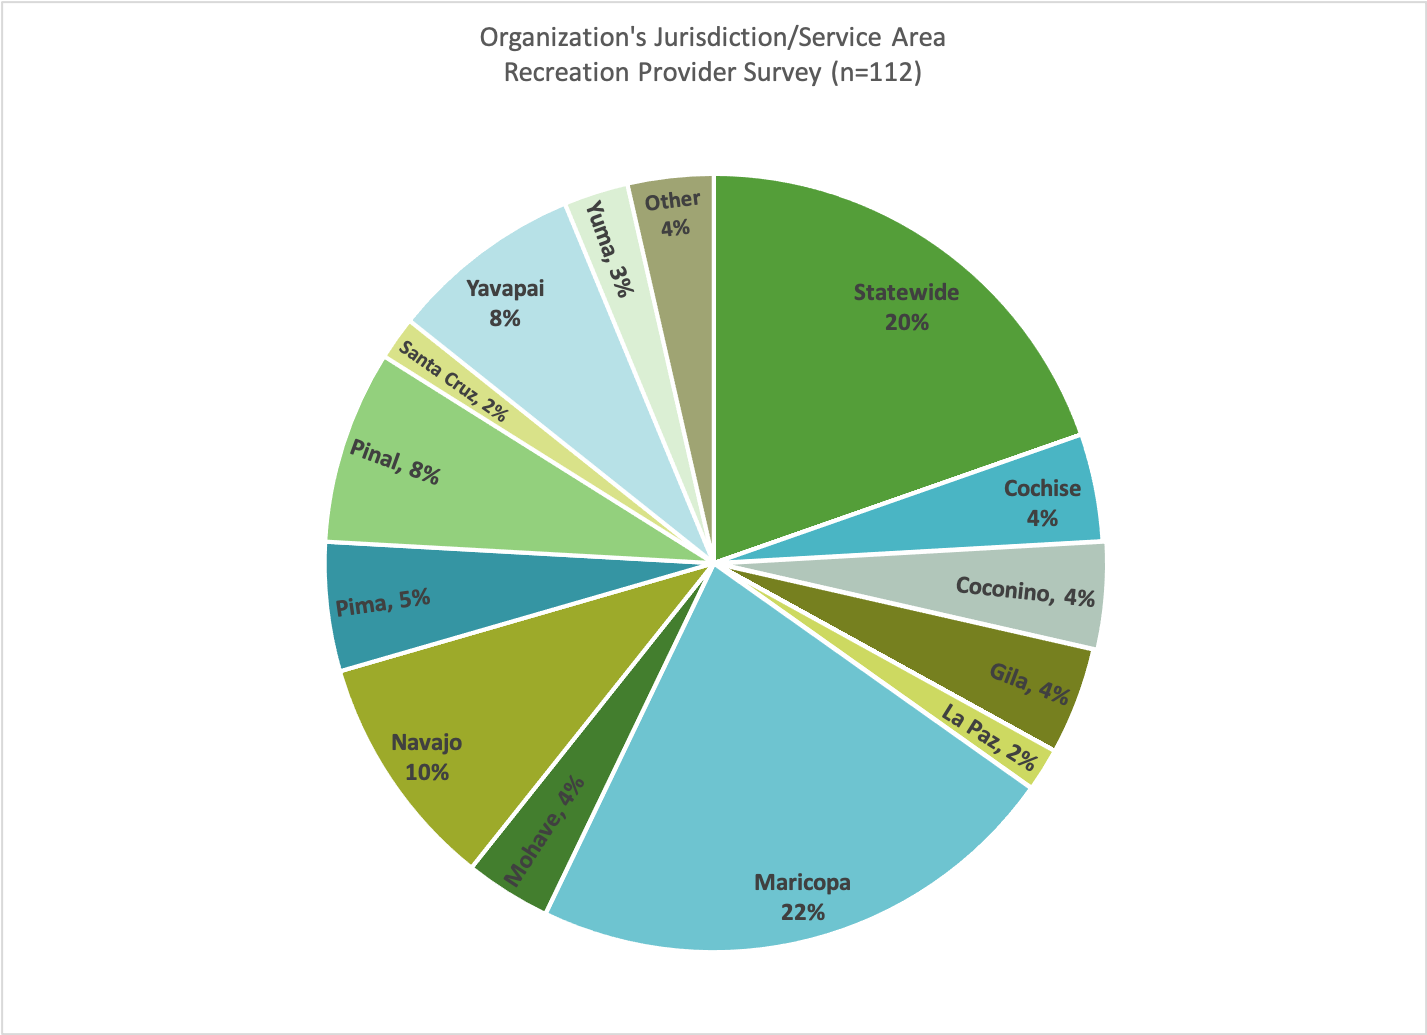 Pie chart of organizations jurisdiction/service area. Statewide 20%, Cochise County, 4%, Coconino 4%, Gila 4%, La Paz 2%, Mohave 4%, Navajo 10%, Pima 5%, Pinal 8%, Santa Cruz 2%, Yavapai 8%, Yuma 3%, Other 4%